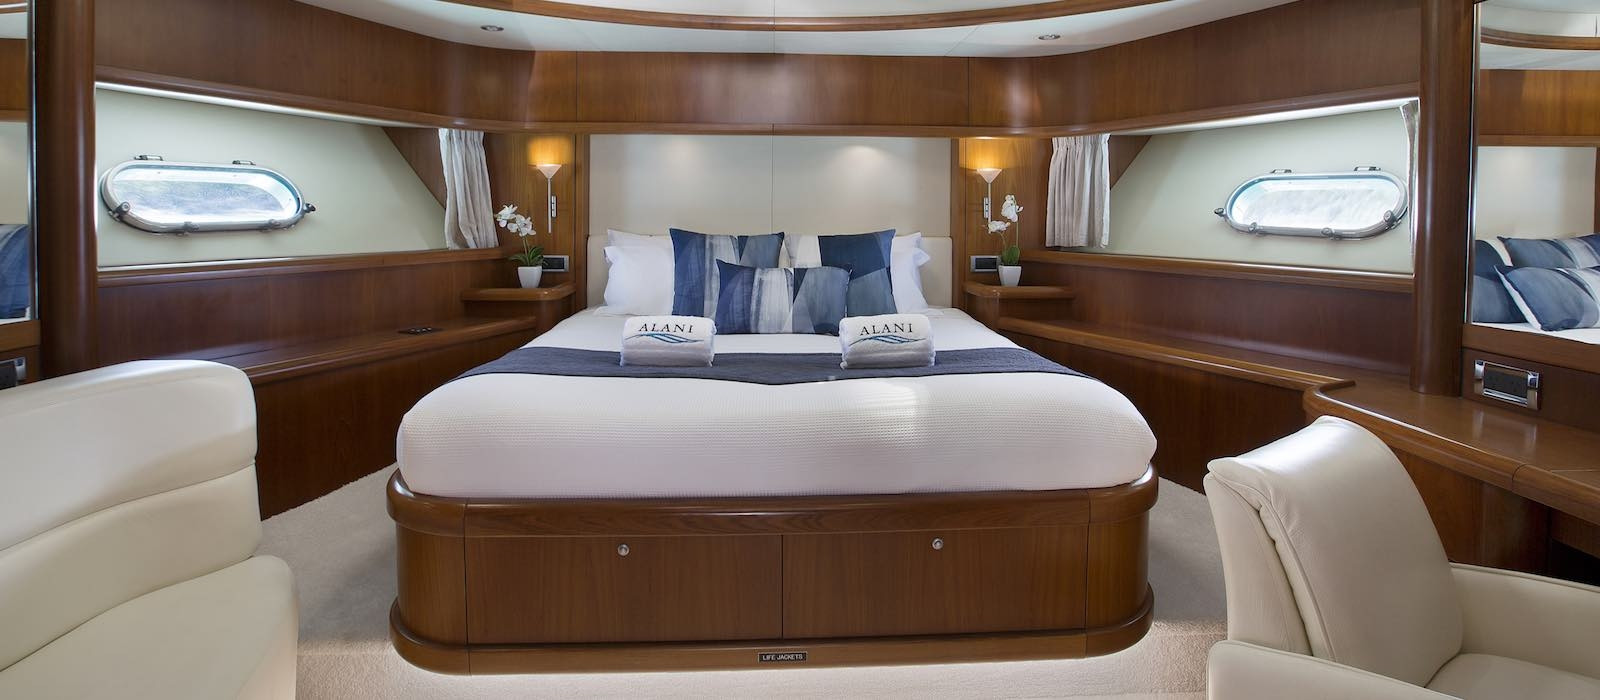 Master Stateroom on Alani luxury boat hire